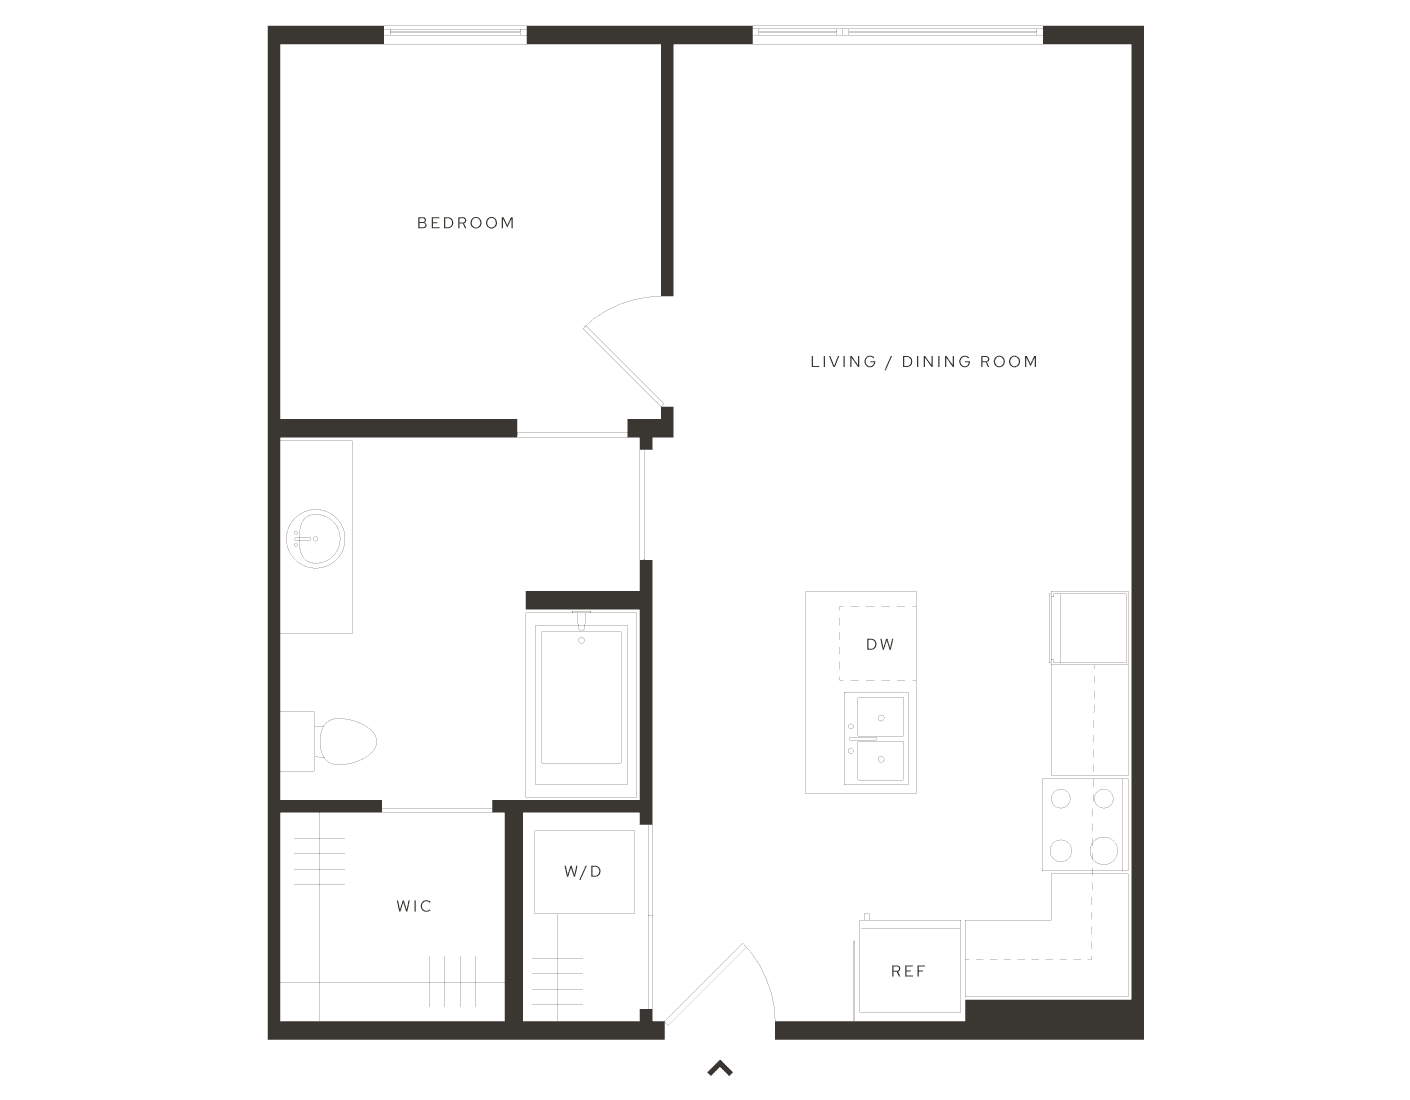 1-bedroom floor plan at the Avia apartments in Salt Lake City